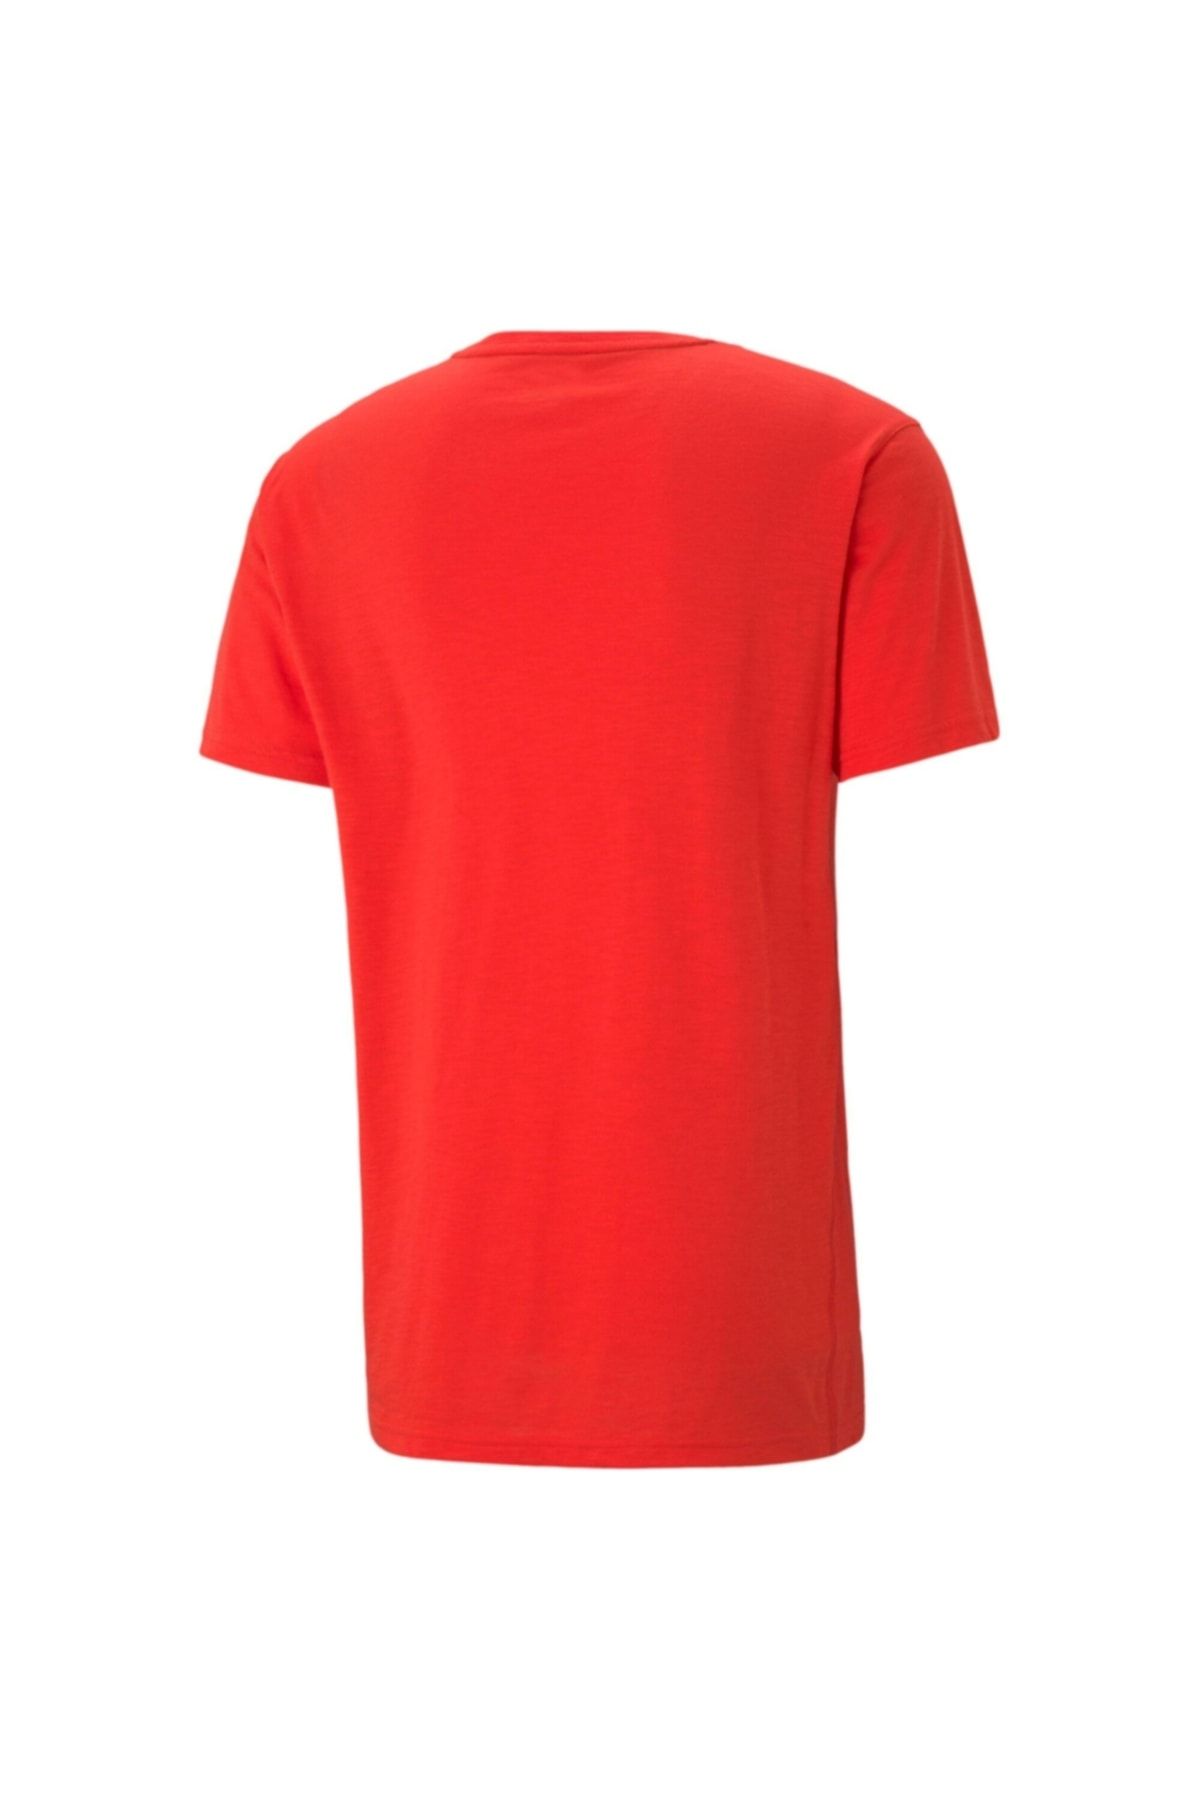 Puma Performance Gaphıc Erkek Tişört - Kırmızı